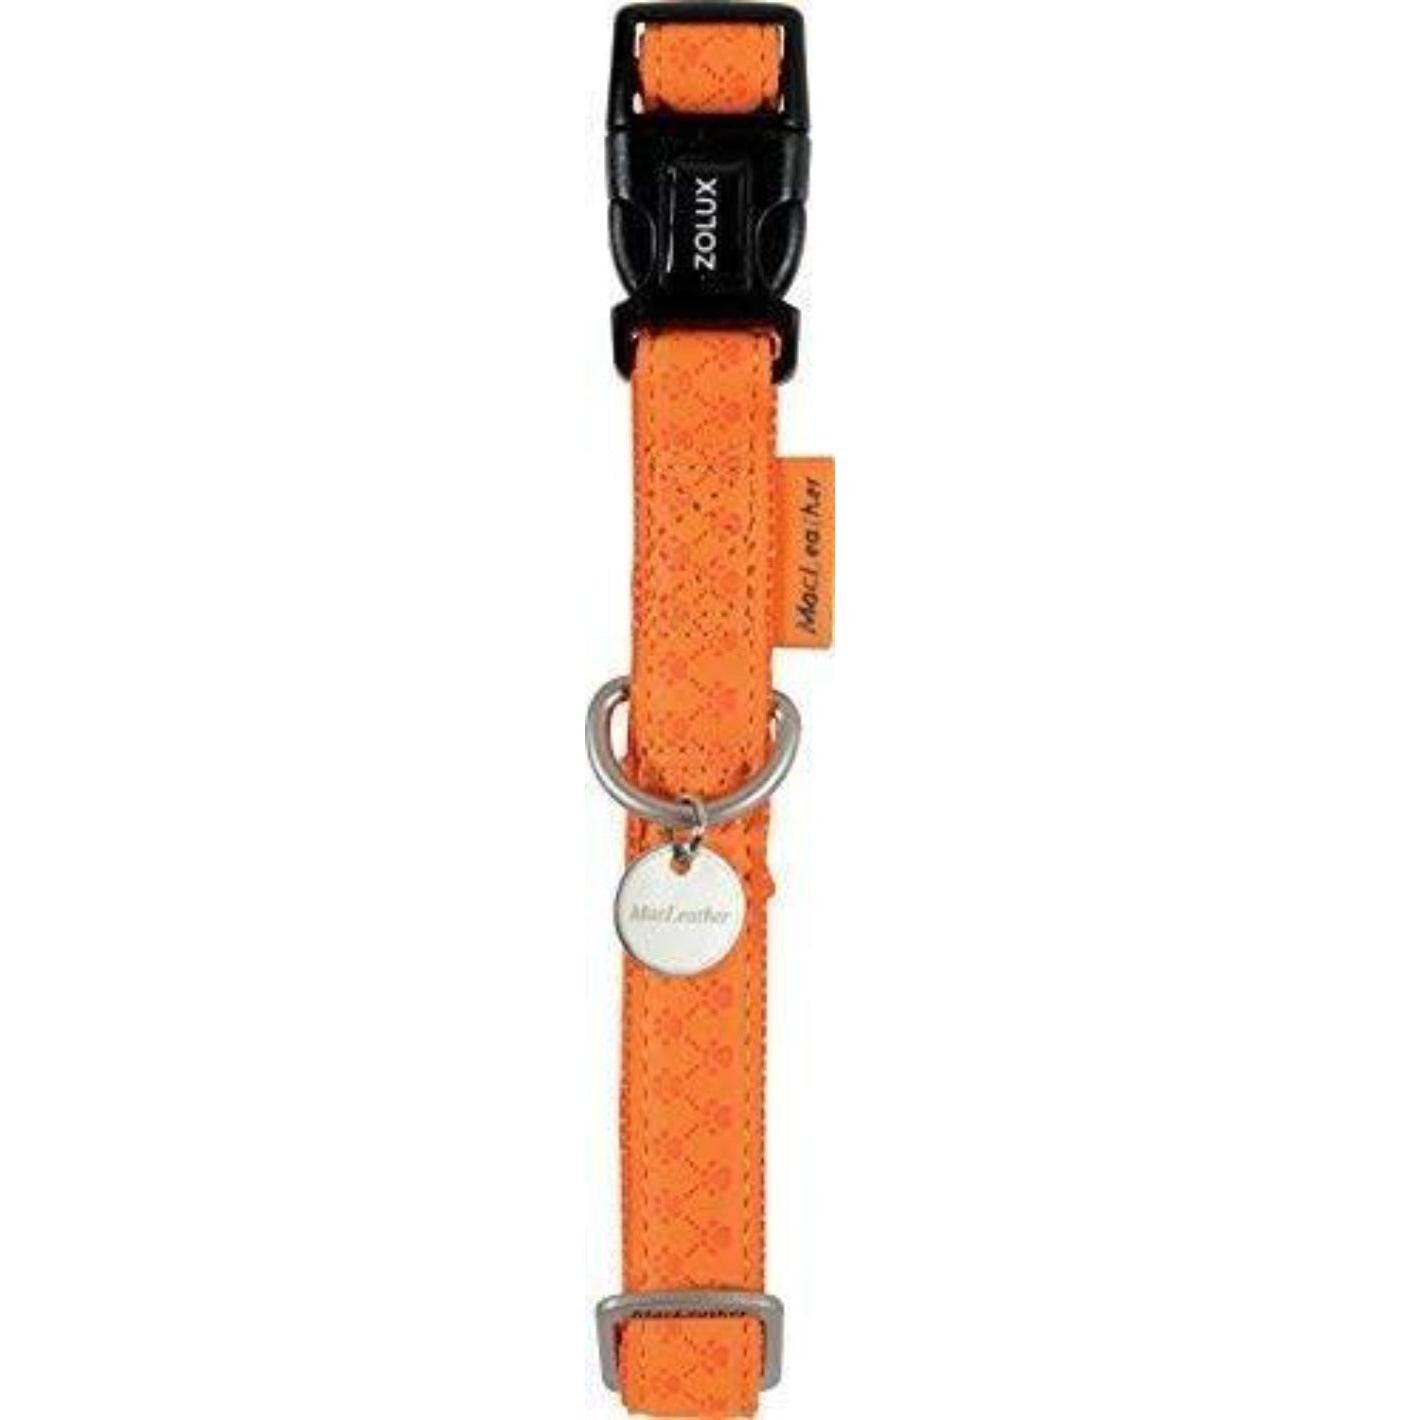 Zolux Collare Regolabile Mac Leather 285/465x20mm Arancione